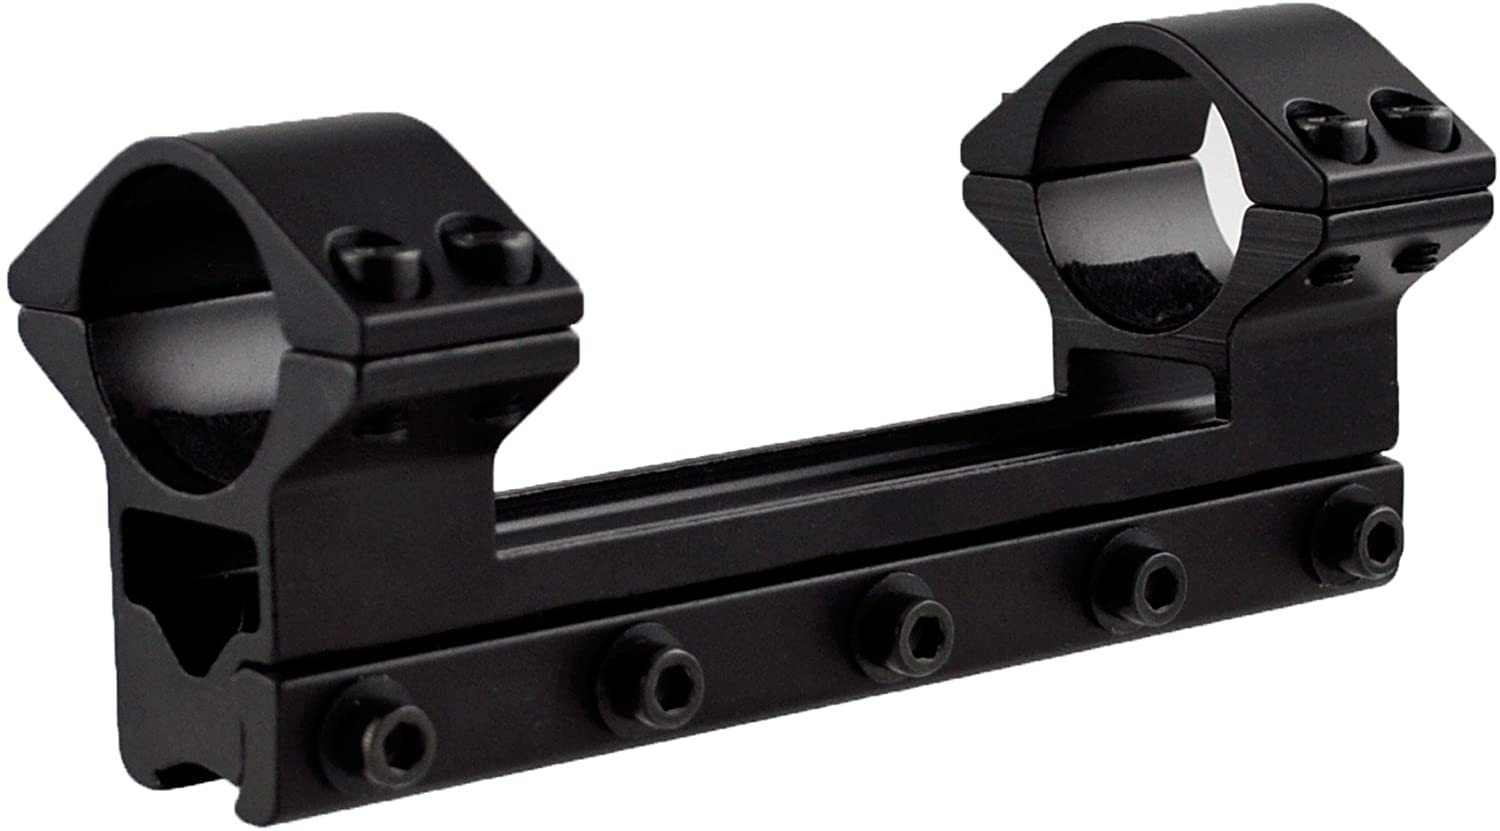 Best one-piece riflescope mount- Instapark Riflescope Mount for Magnum Airgun